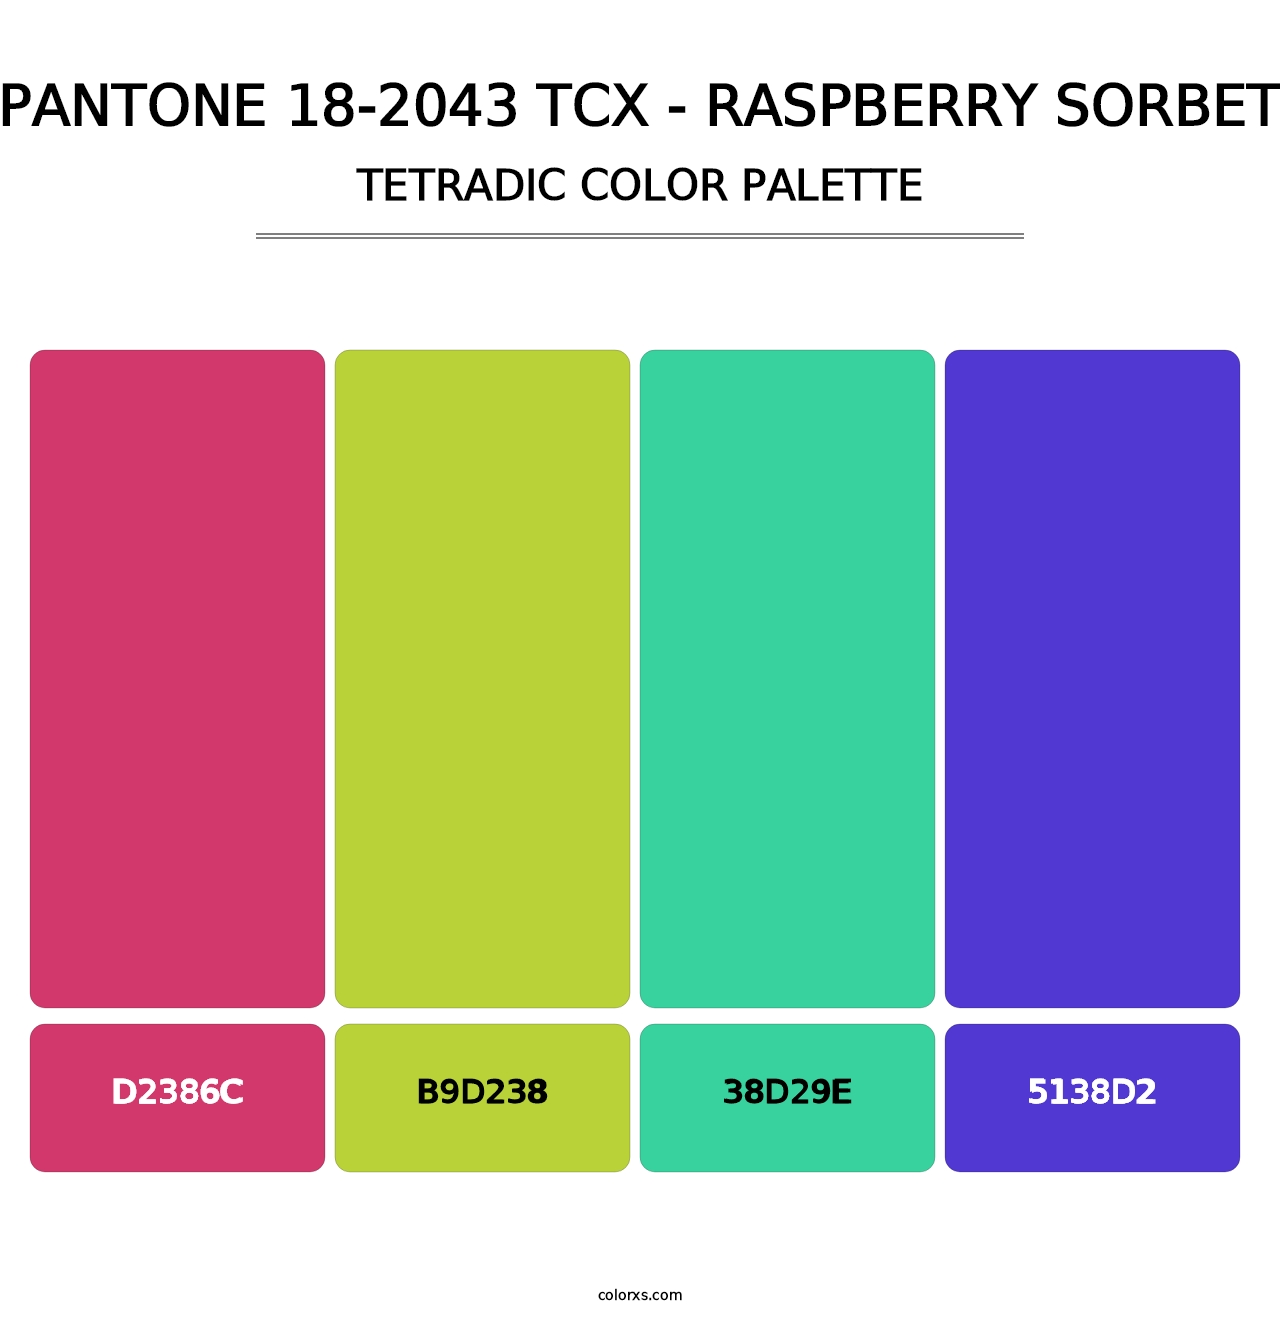 PANTONE 18-2043 TCX - Raspberry Sorbet - Tetradic Color Palette